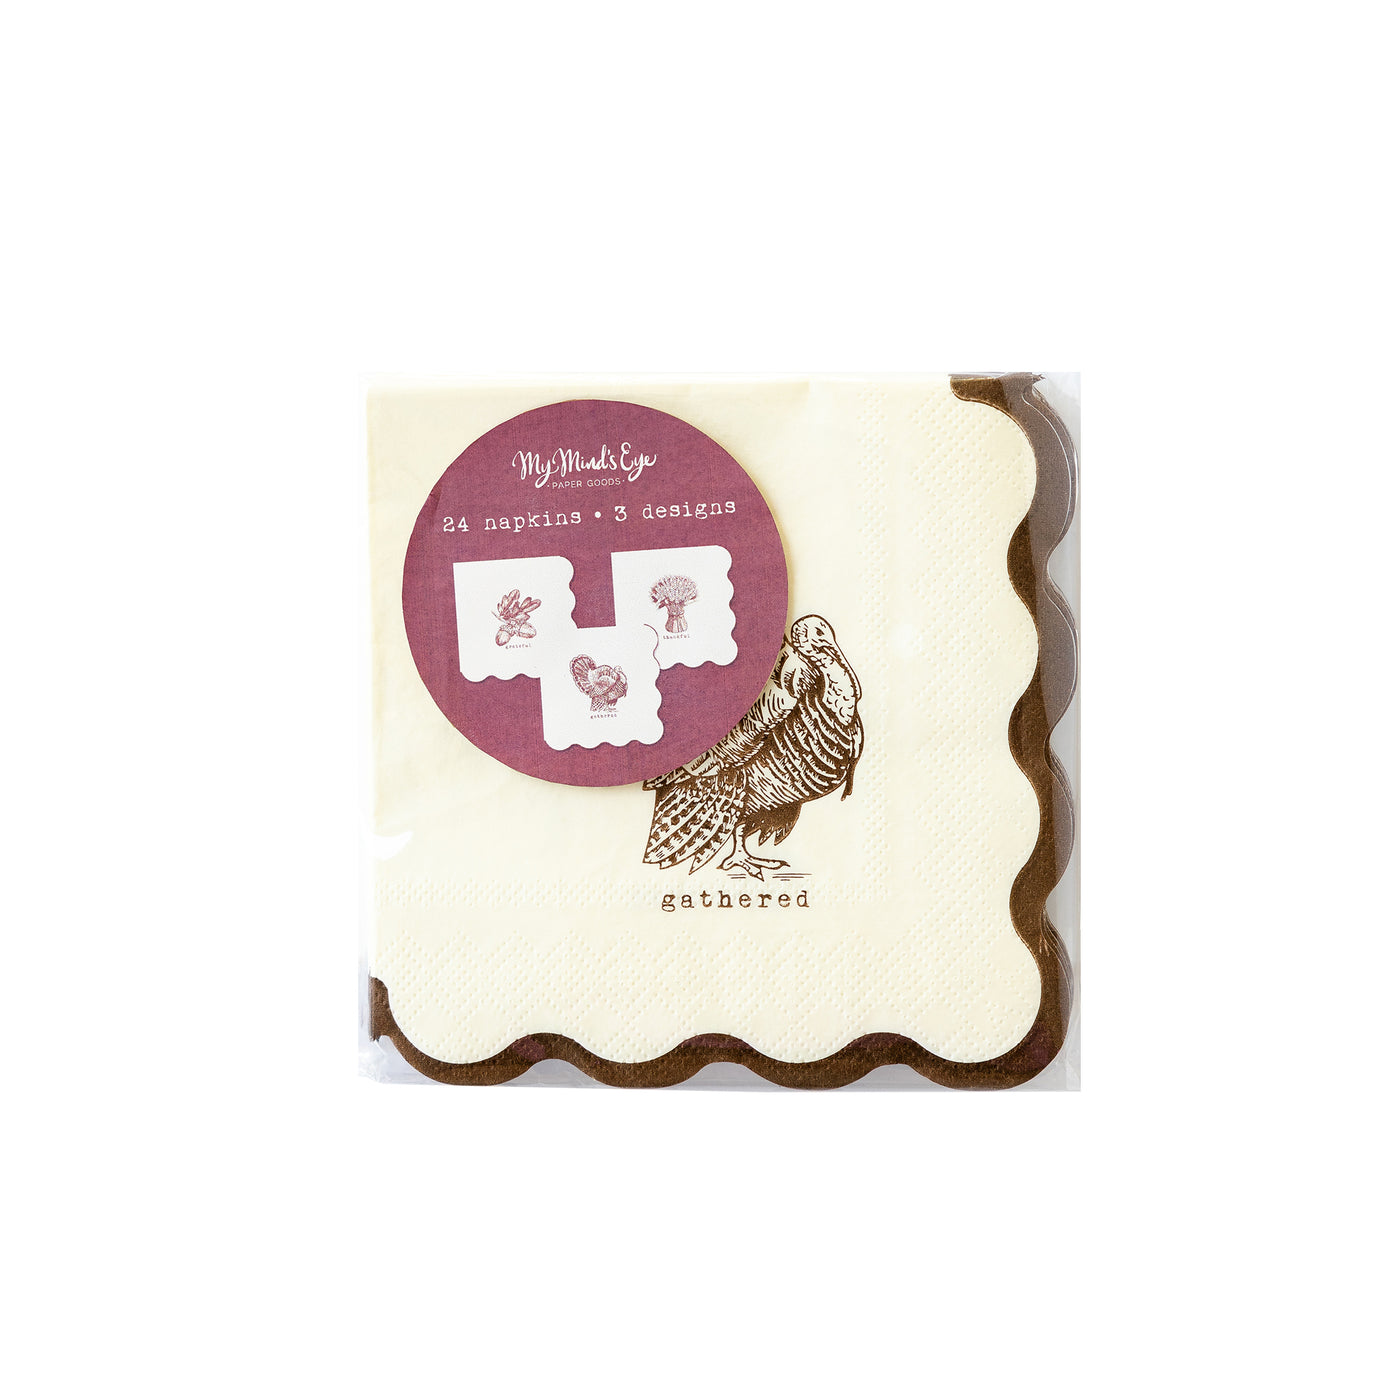 THP1036 - Harvest Icon Paper Cocktail Napkin Set